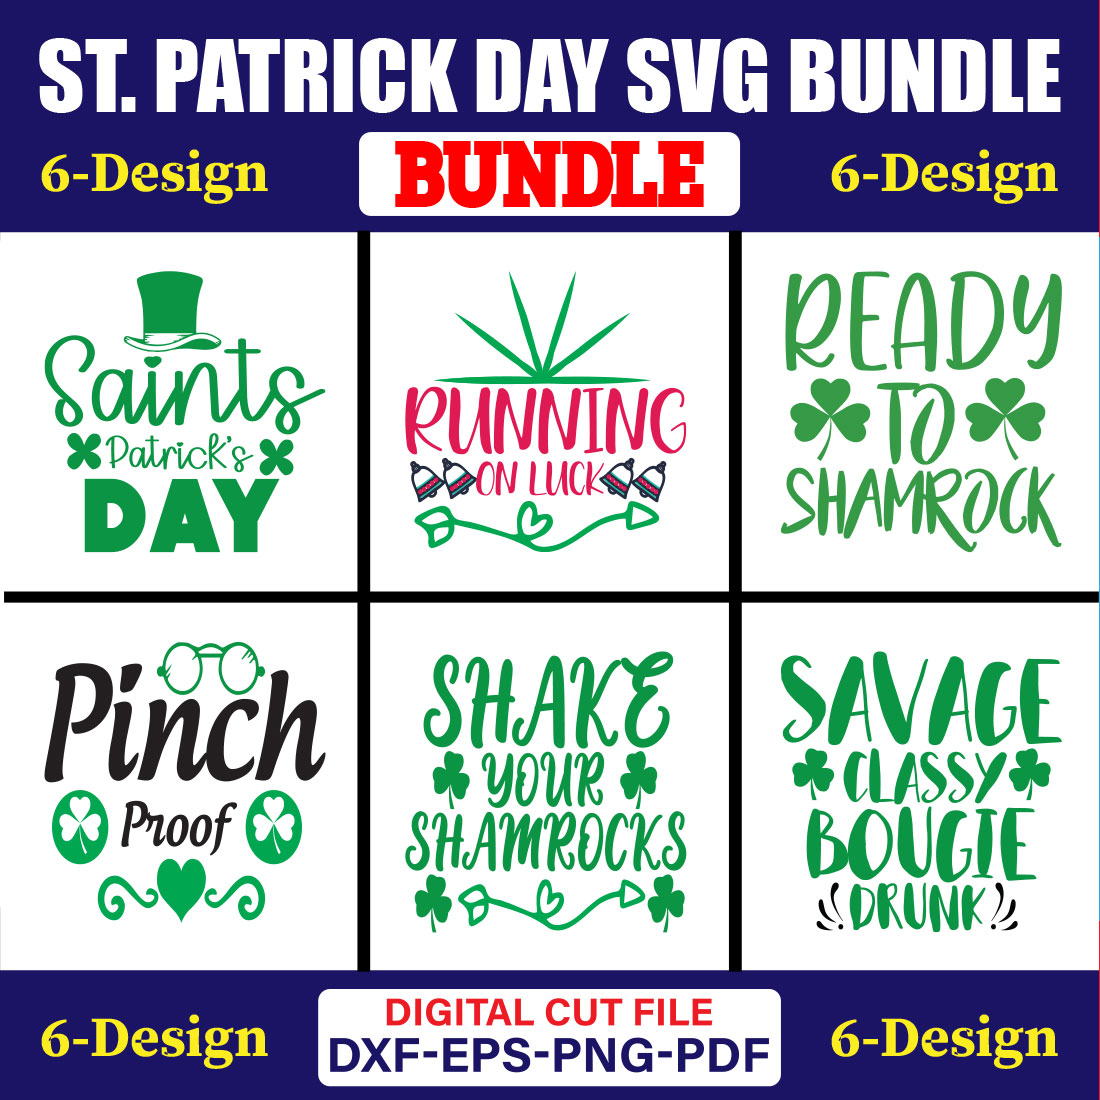 St Patrick Day SVG T-shirt Design Bundle Vol-30 cover image.